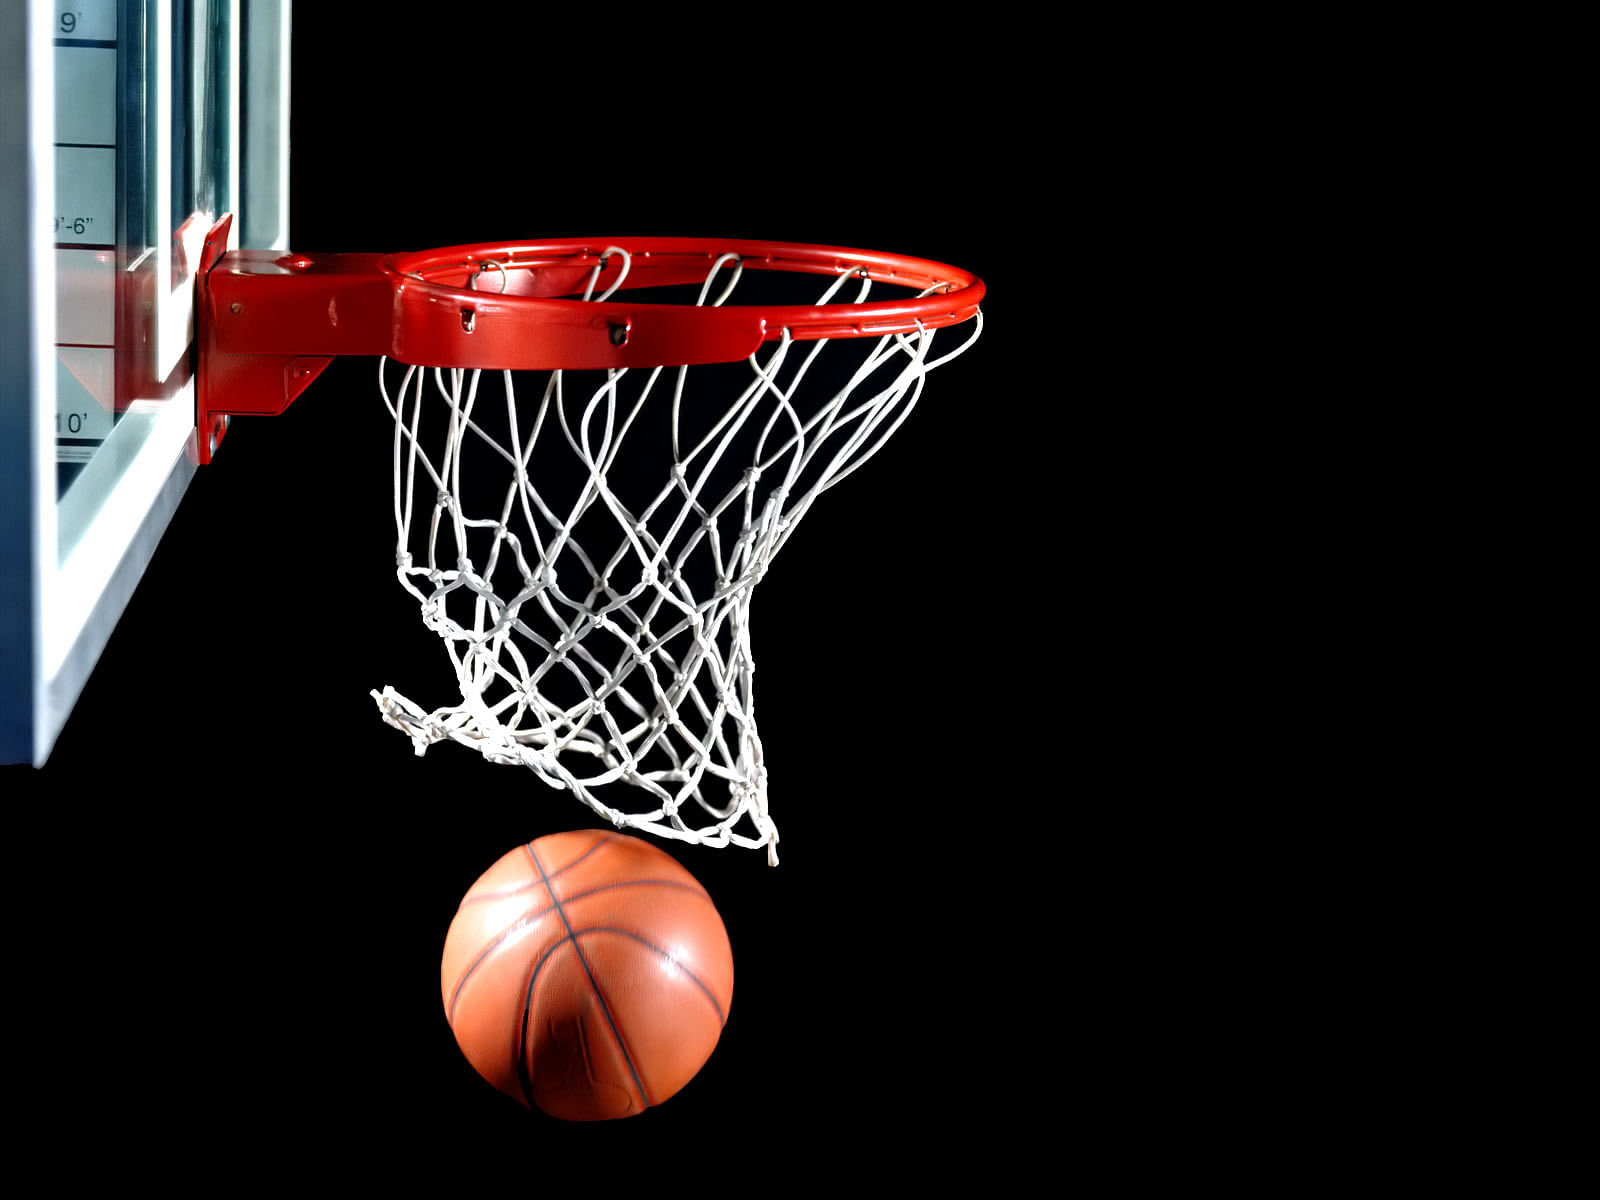 Federation Cup Basketball: ONGC, Tamil Nadu basket titles1600 x 1200